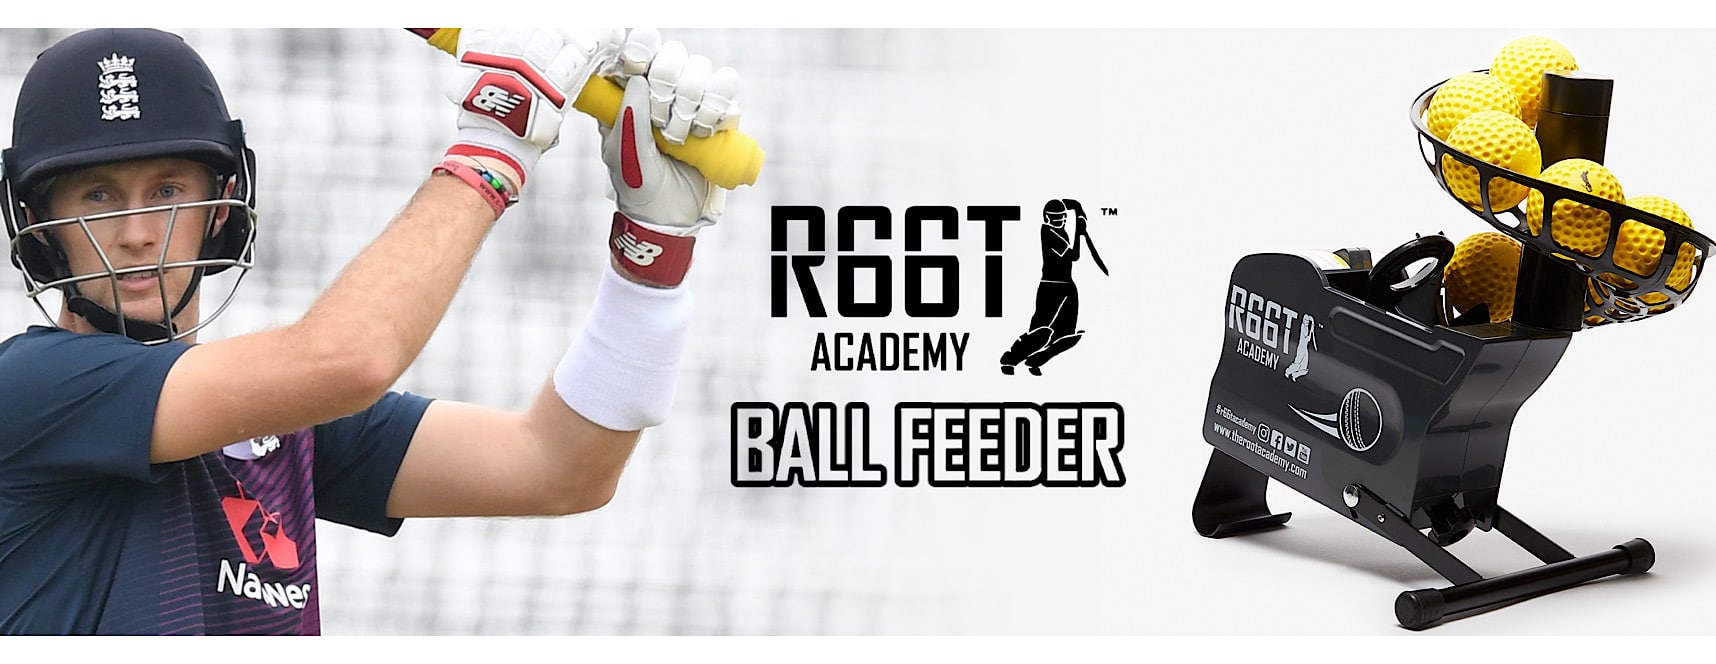 R66T Academy Ball Feeder